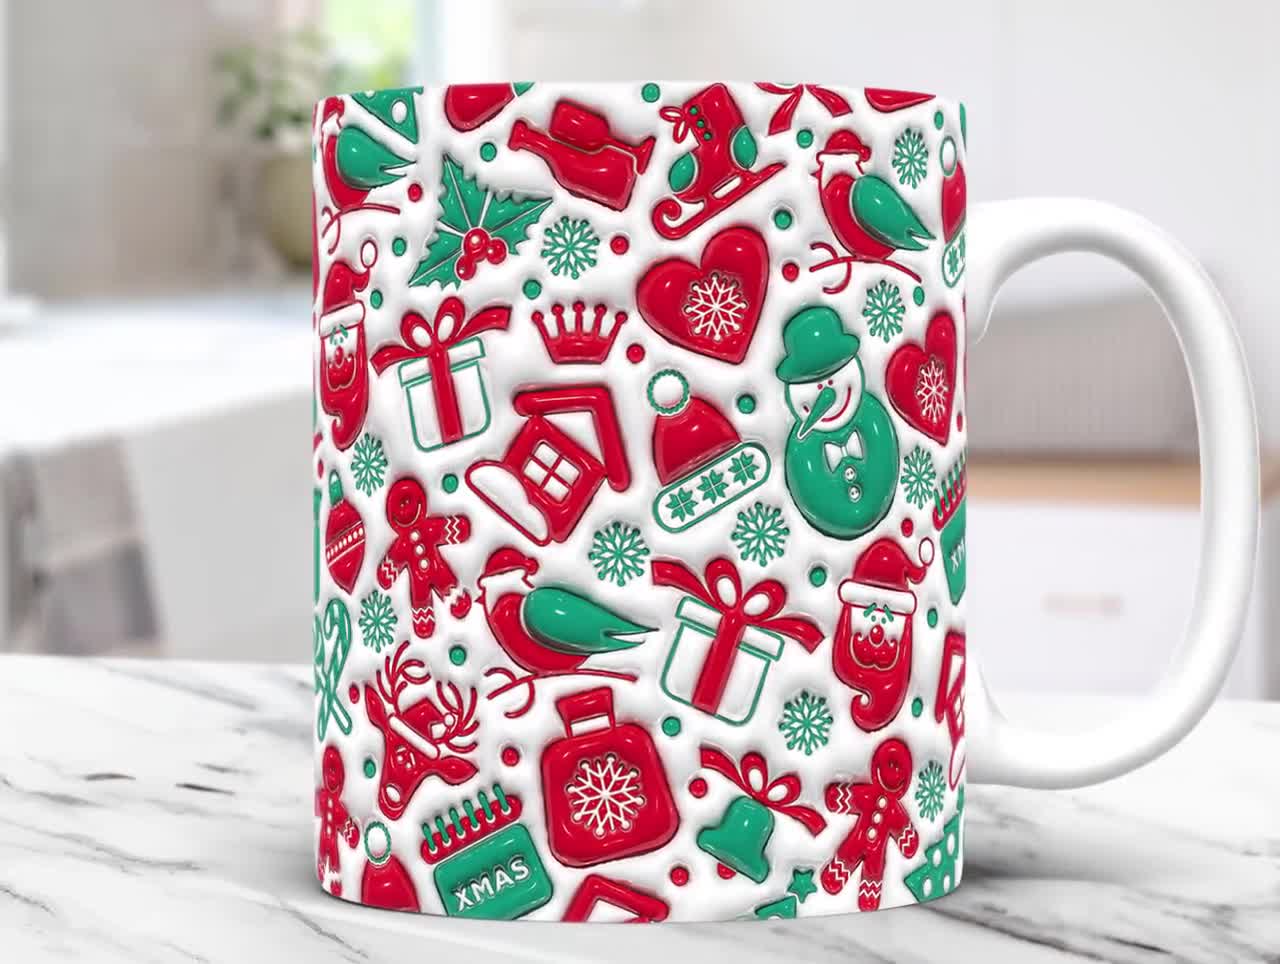 https://v.etsystatic.com/video/upload/q_auto/3D-Inflated-Christmas-Mug-Wrap_ry2myo.jpg